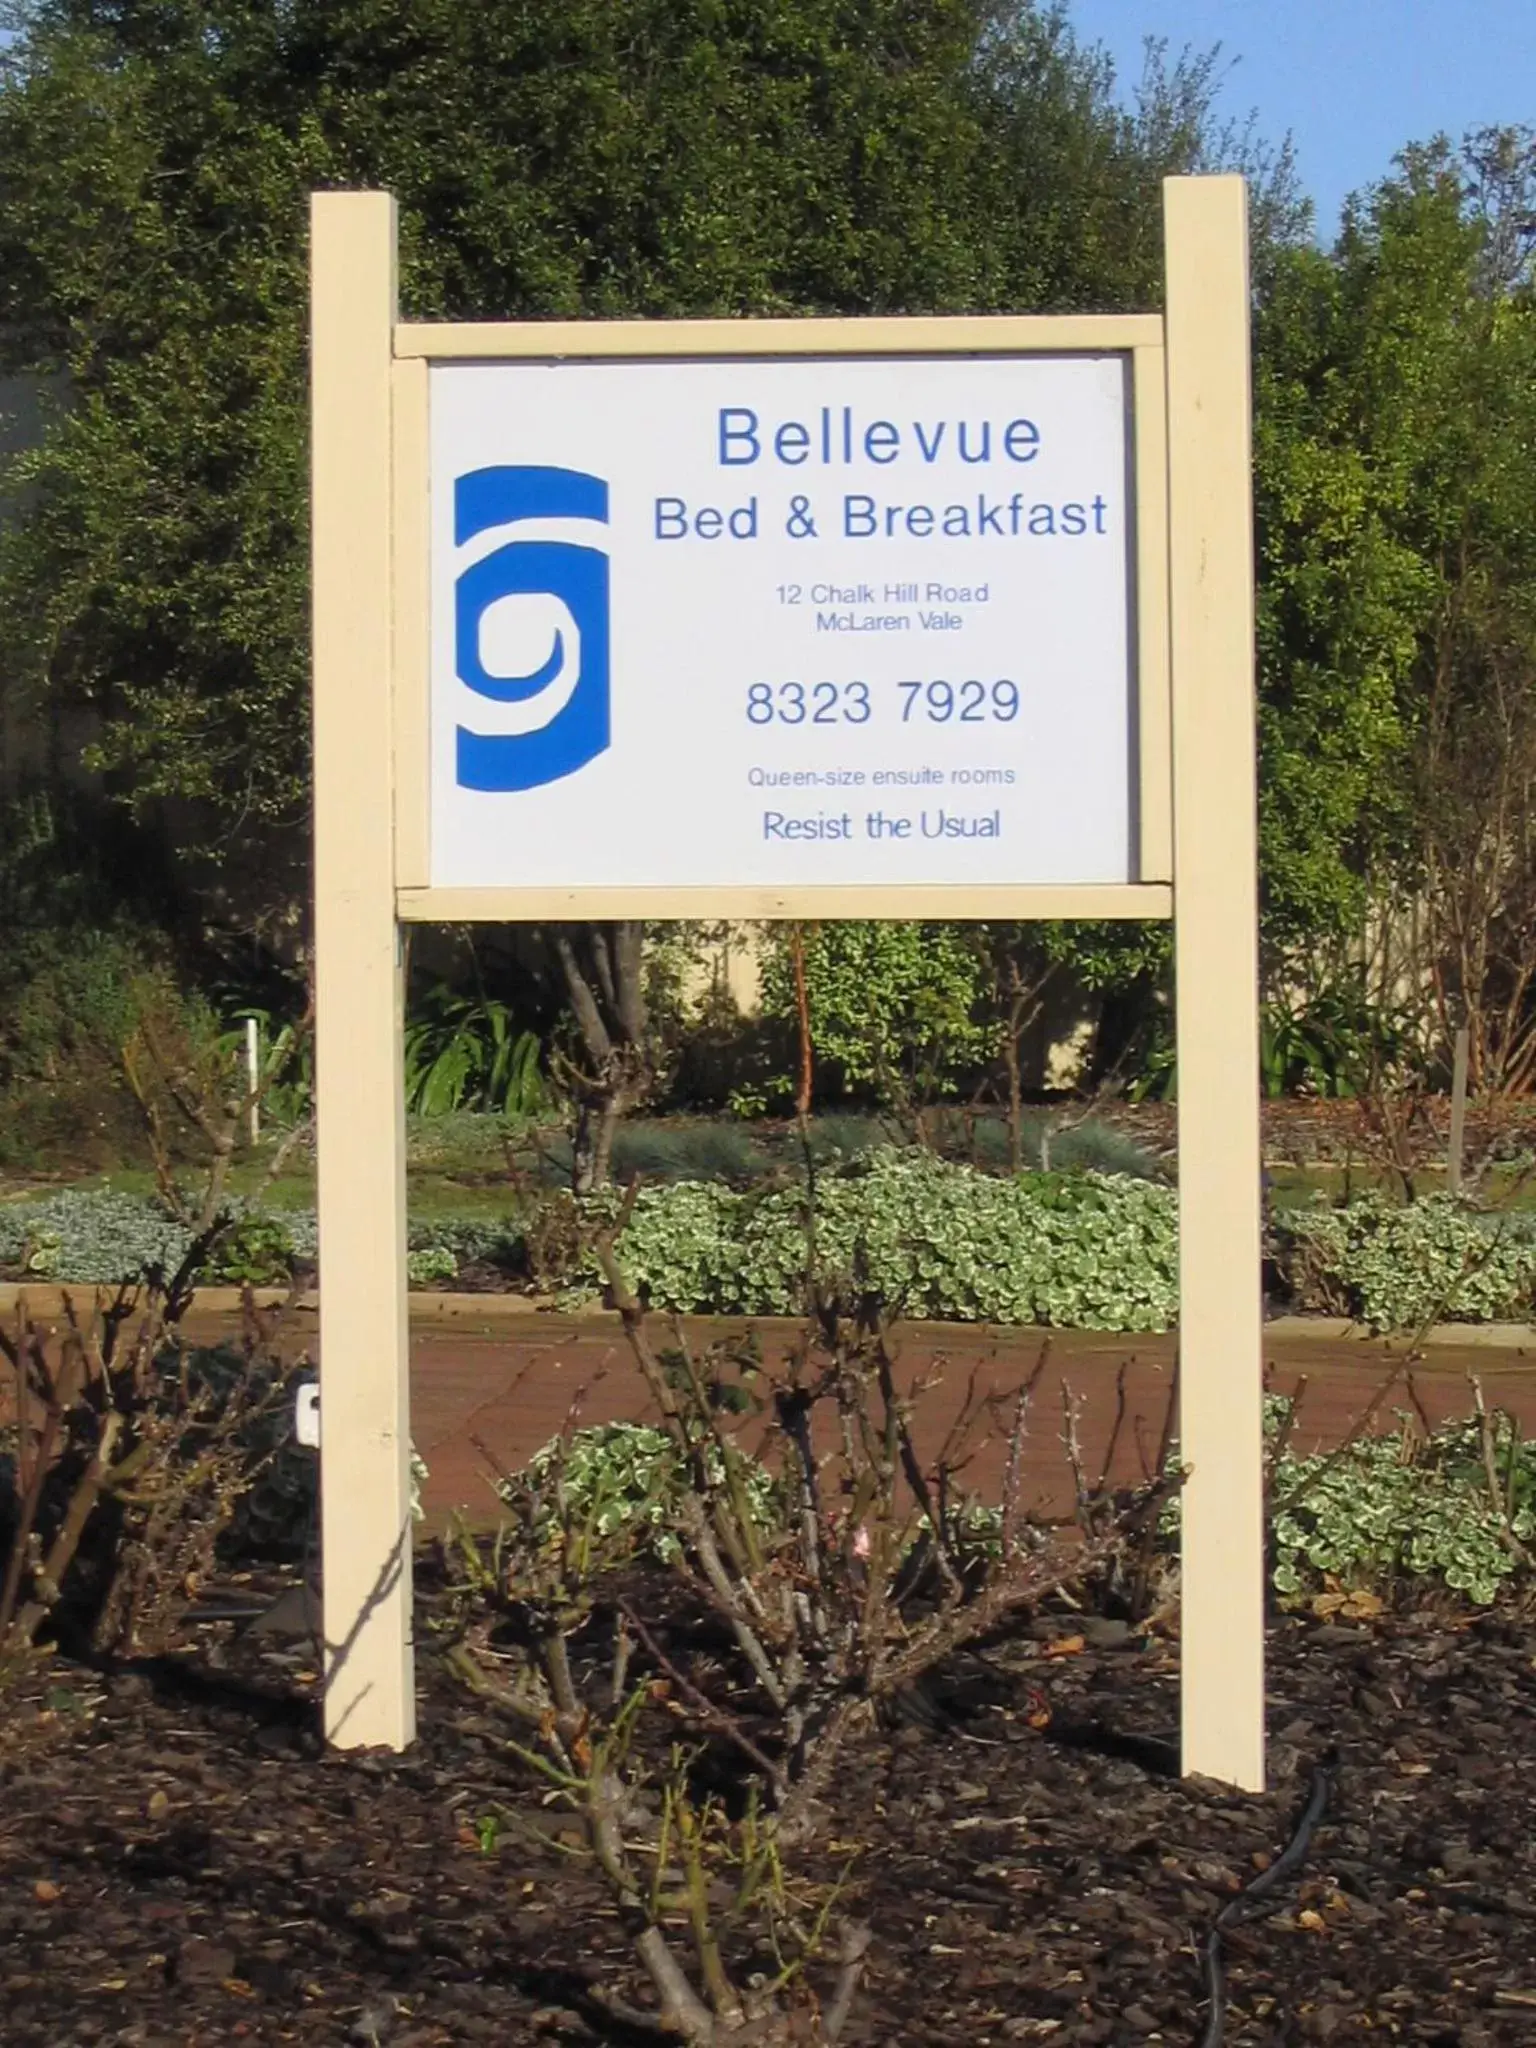 Property logo or sign in Bellevue Bed & Breakfast